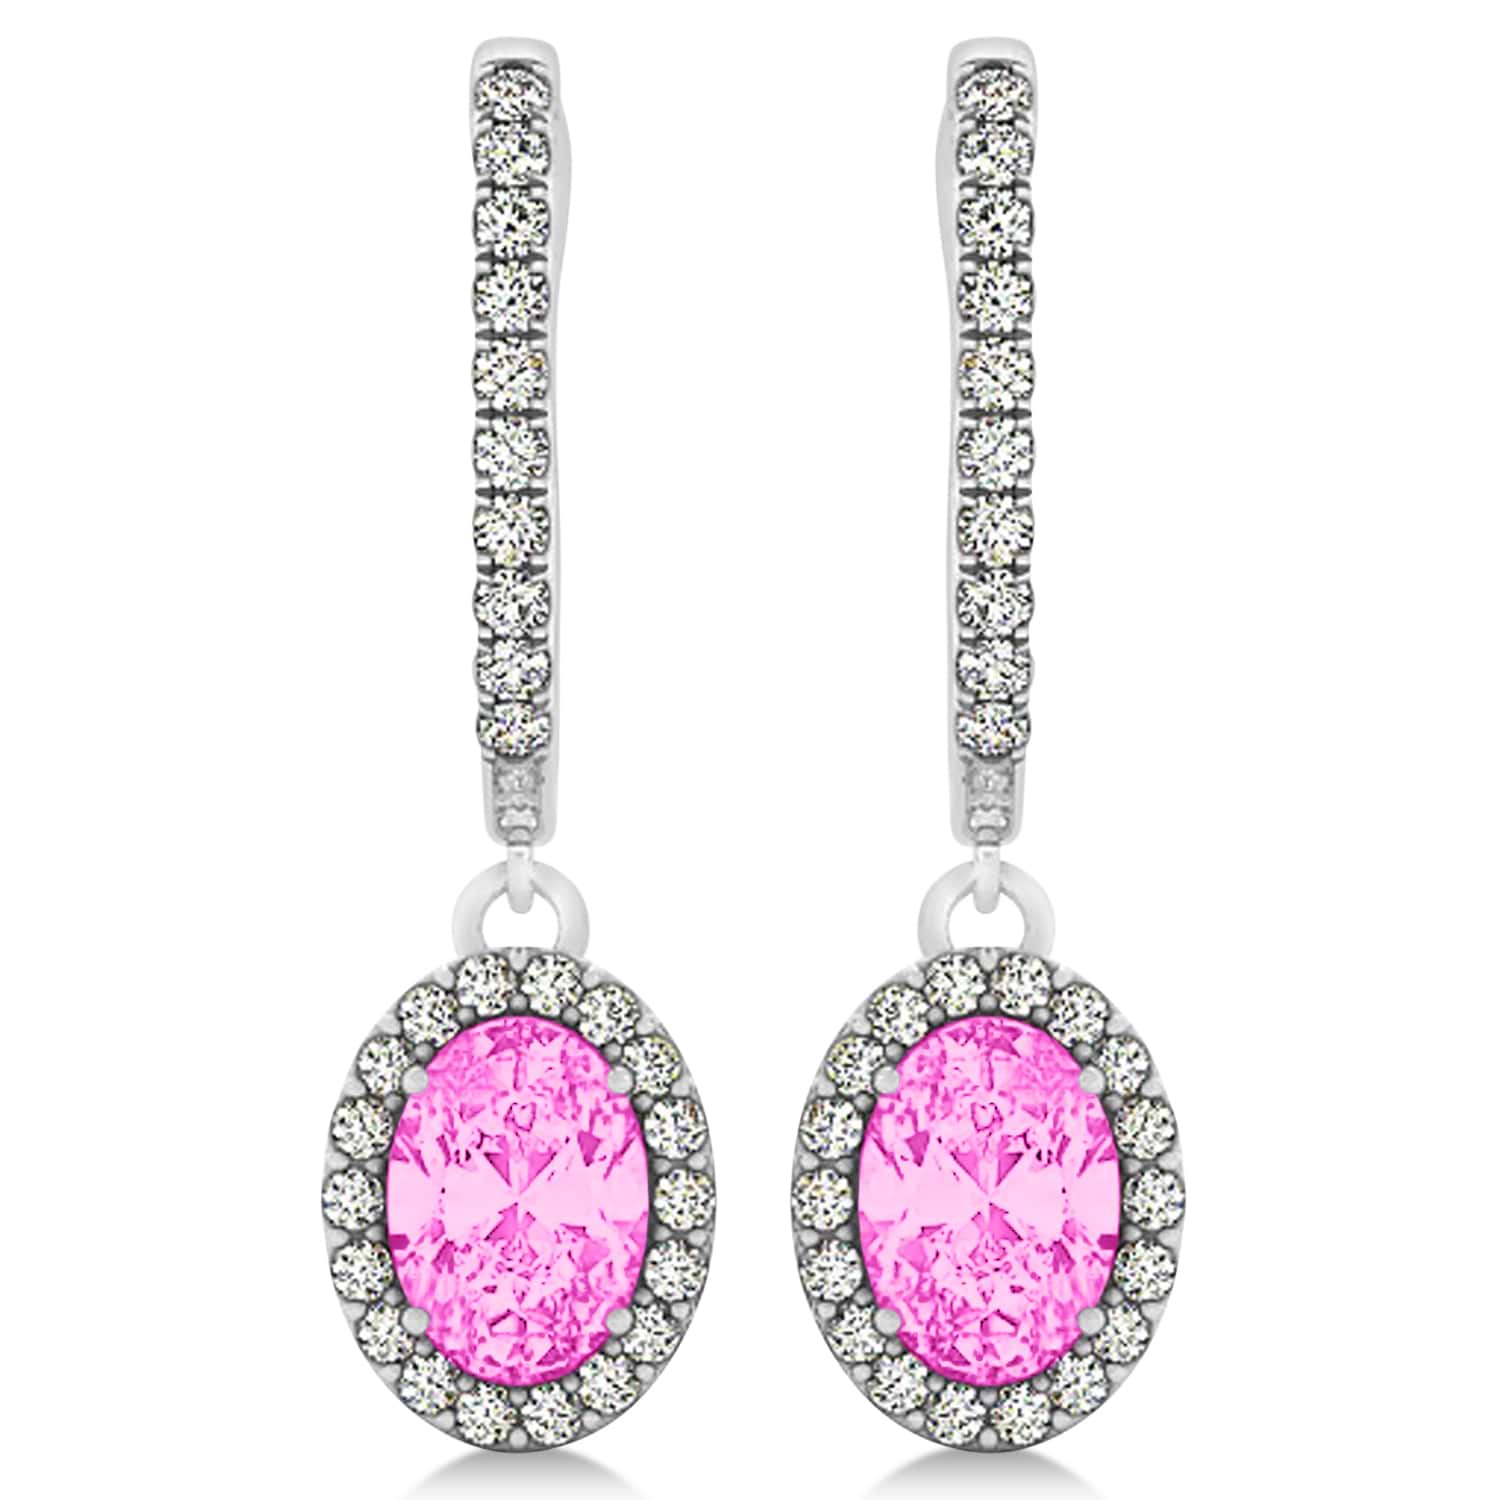 Oval Halo Diamond & Pink Sapphire Drop Earrings in 14k White Gold 1.60ct